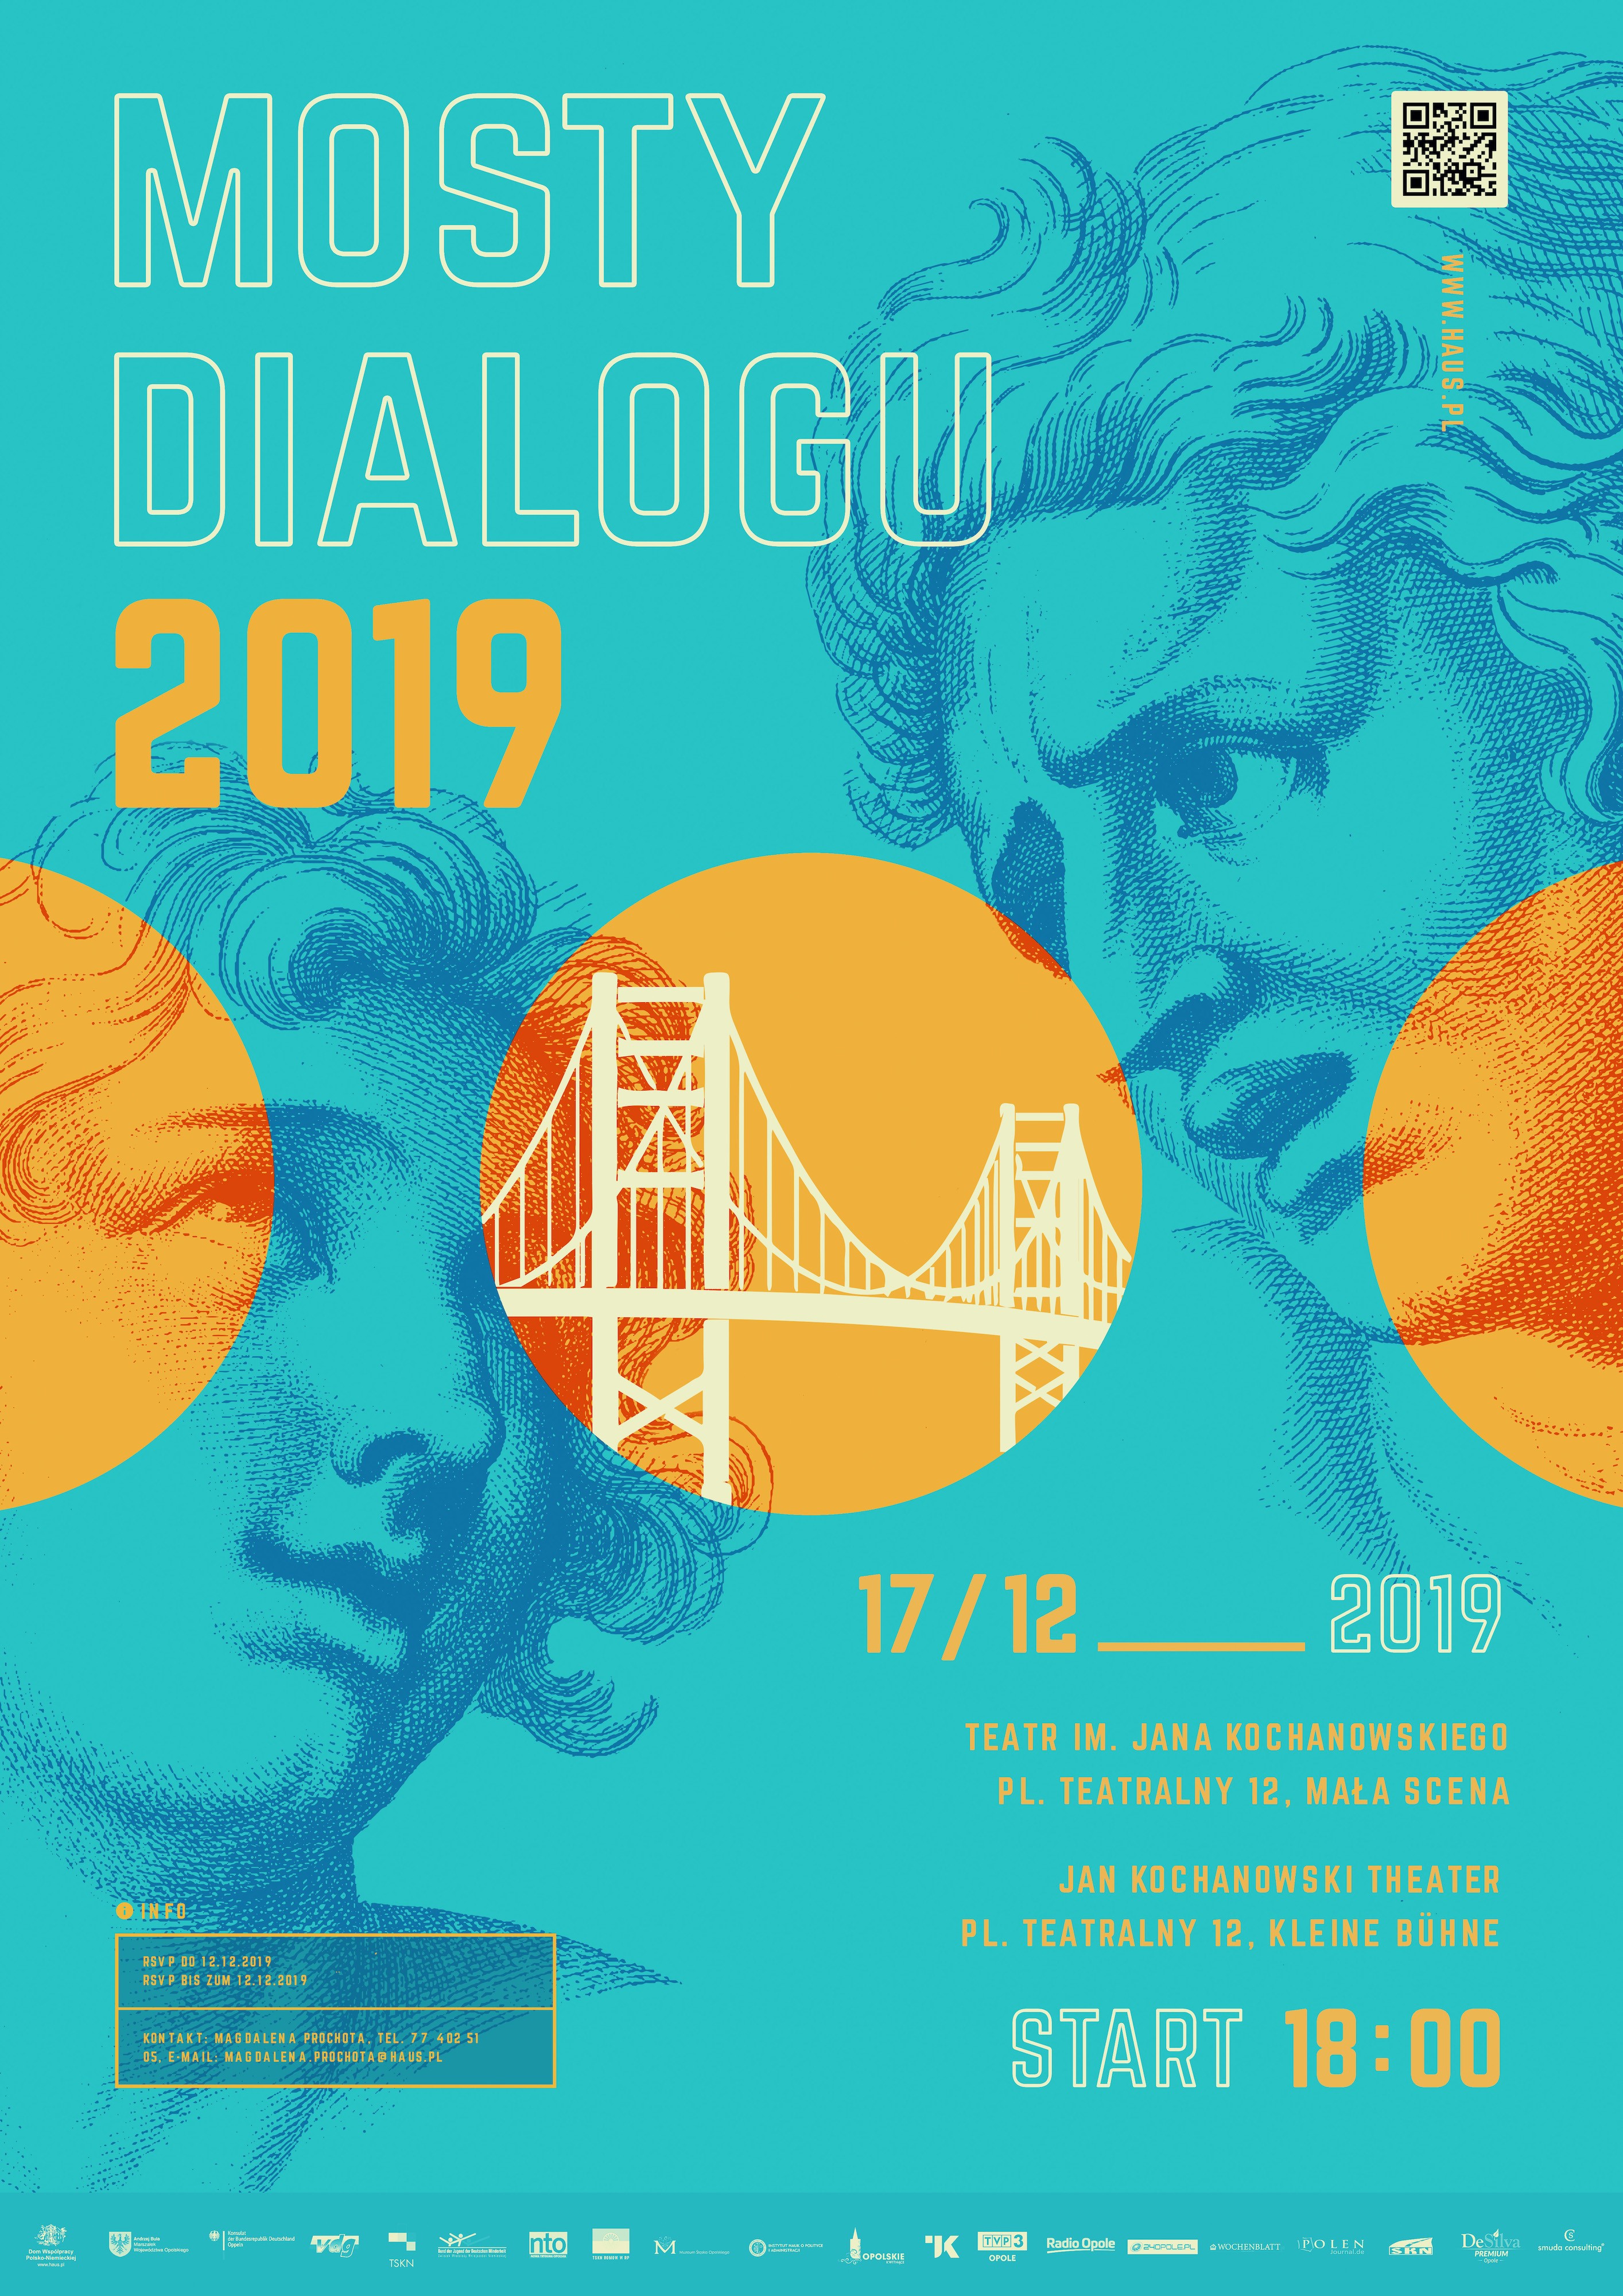 Gala plebiscytu Mosty Dialogu 2019 już we wtorek